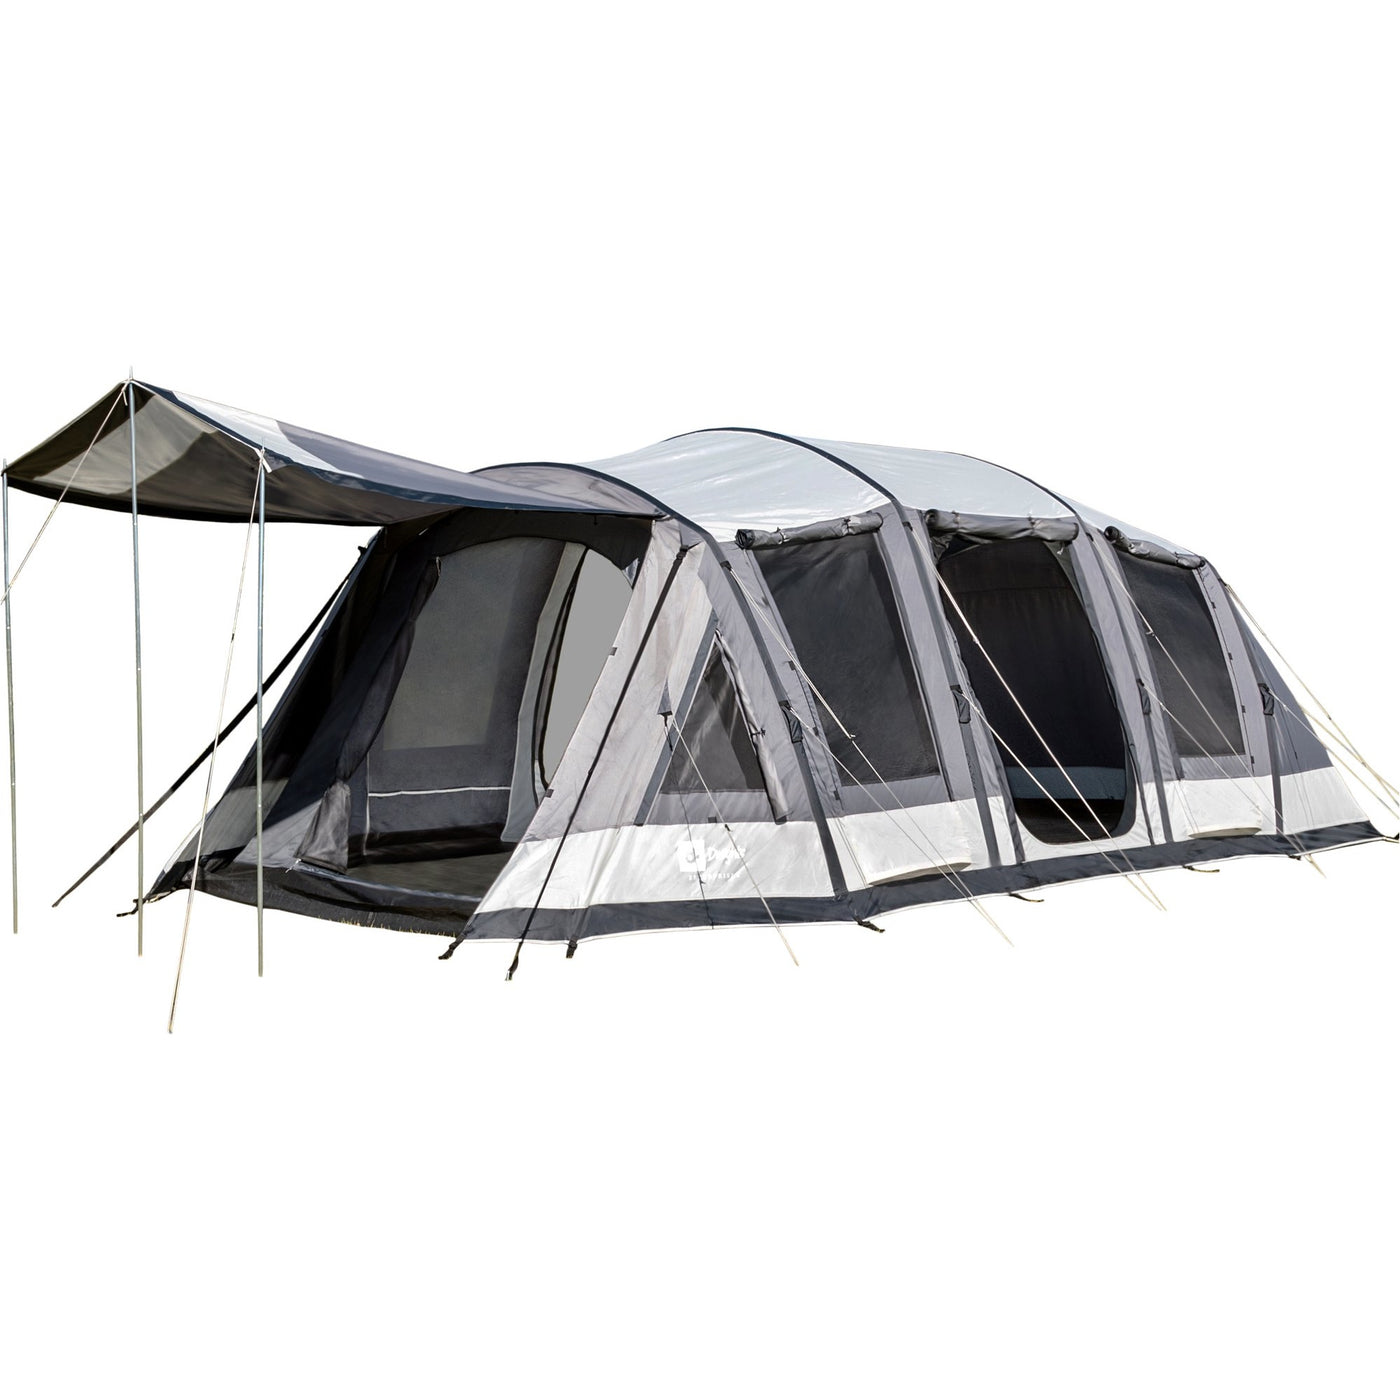 Enterprise 2 Inflatable Air Tent